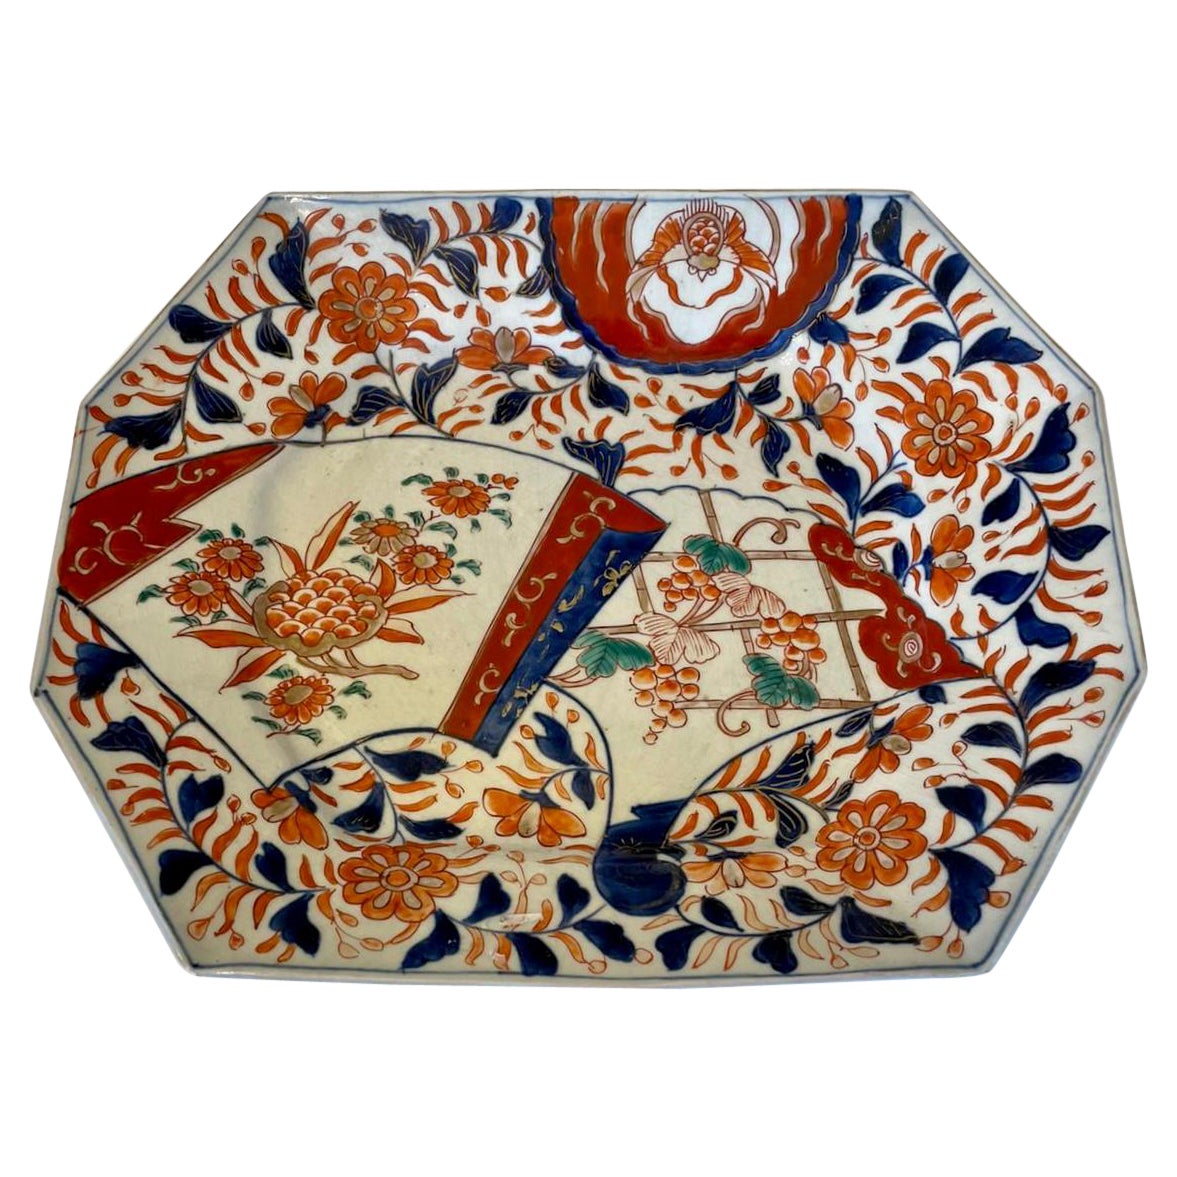 Unusual Antique Shaped Hand Painted Imari Dish